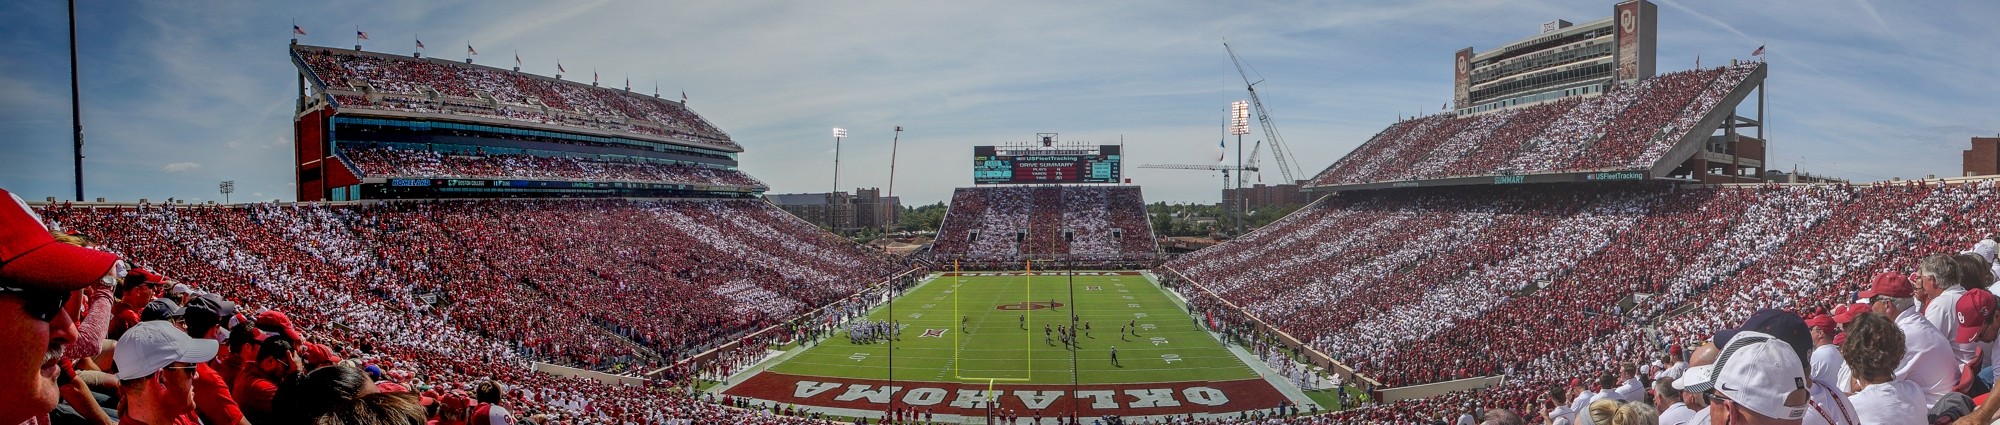 Panoramic image of the Oklahoma Memorial Stadium viewed from the north